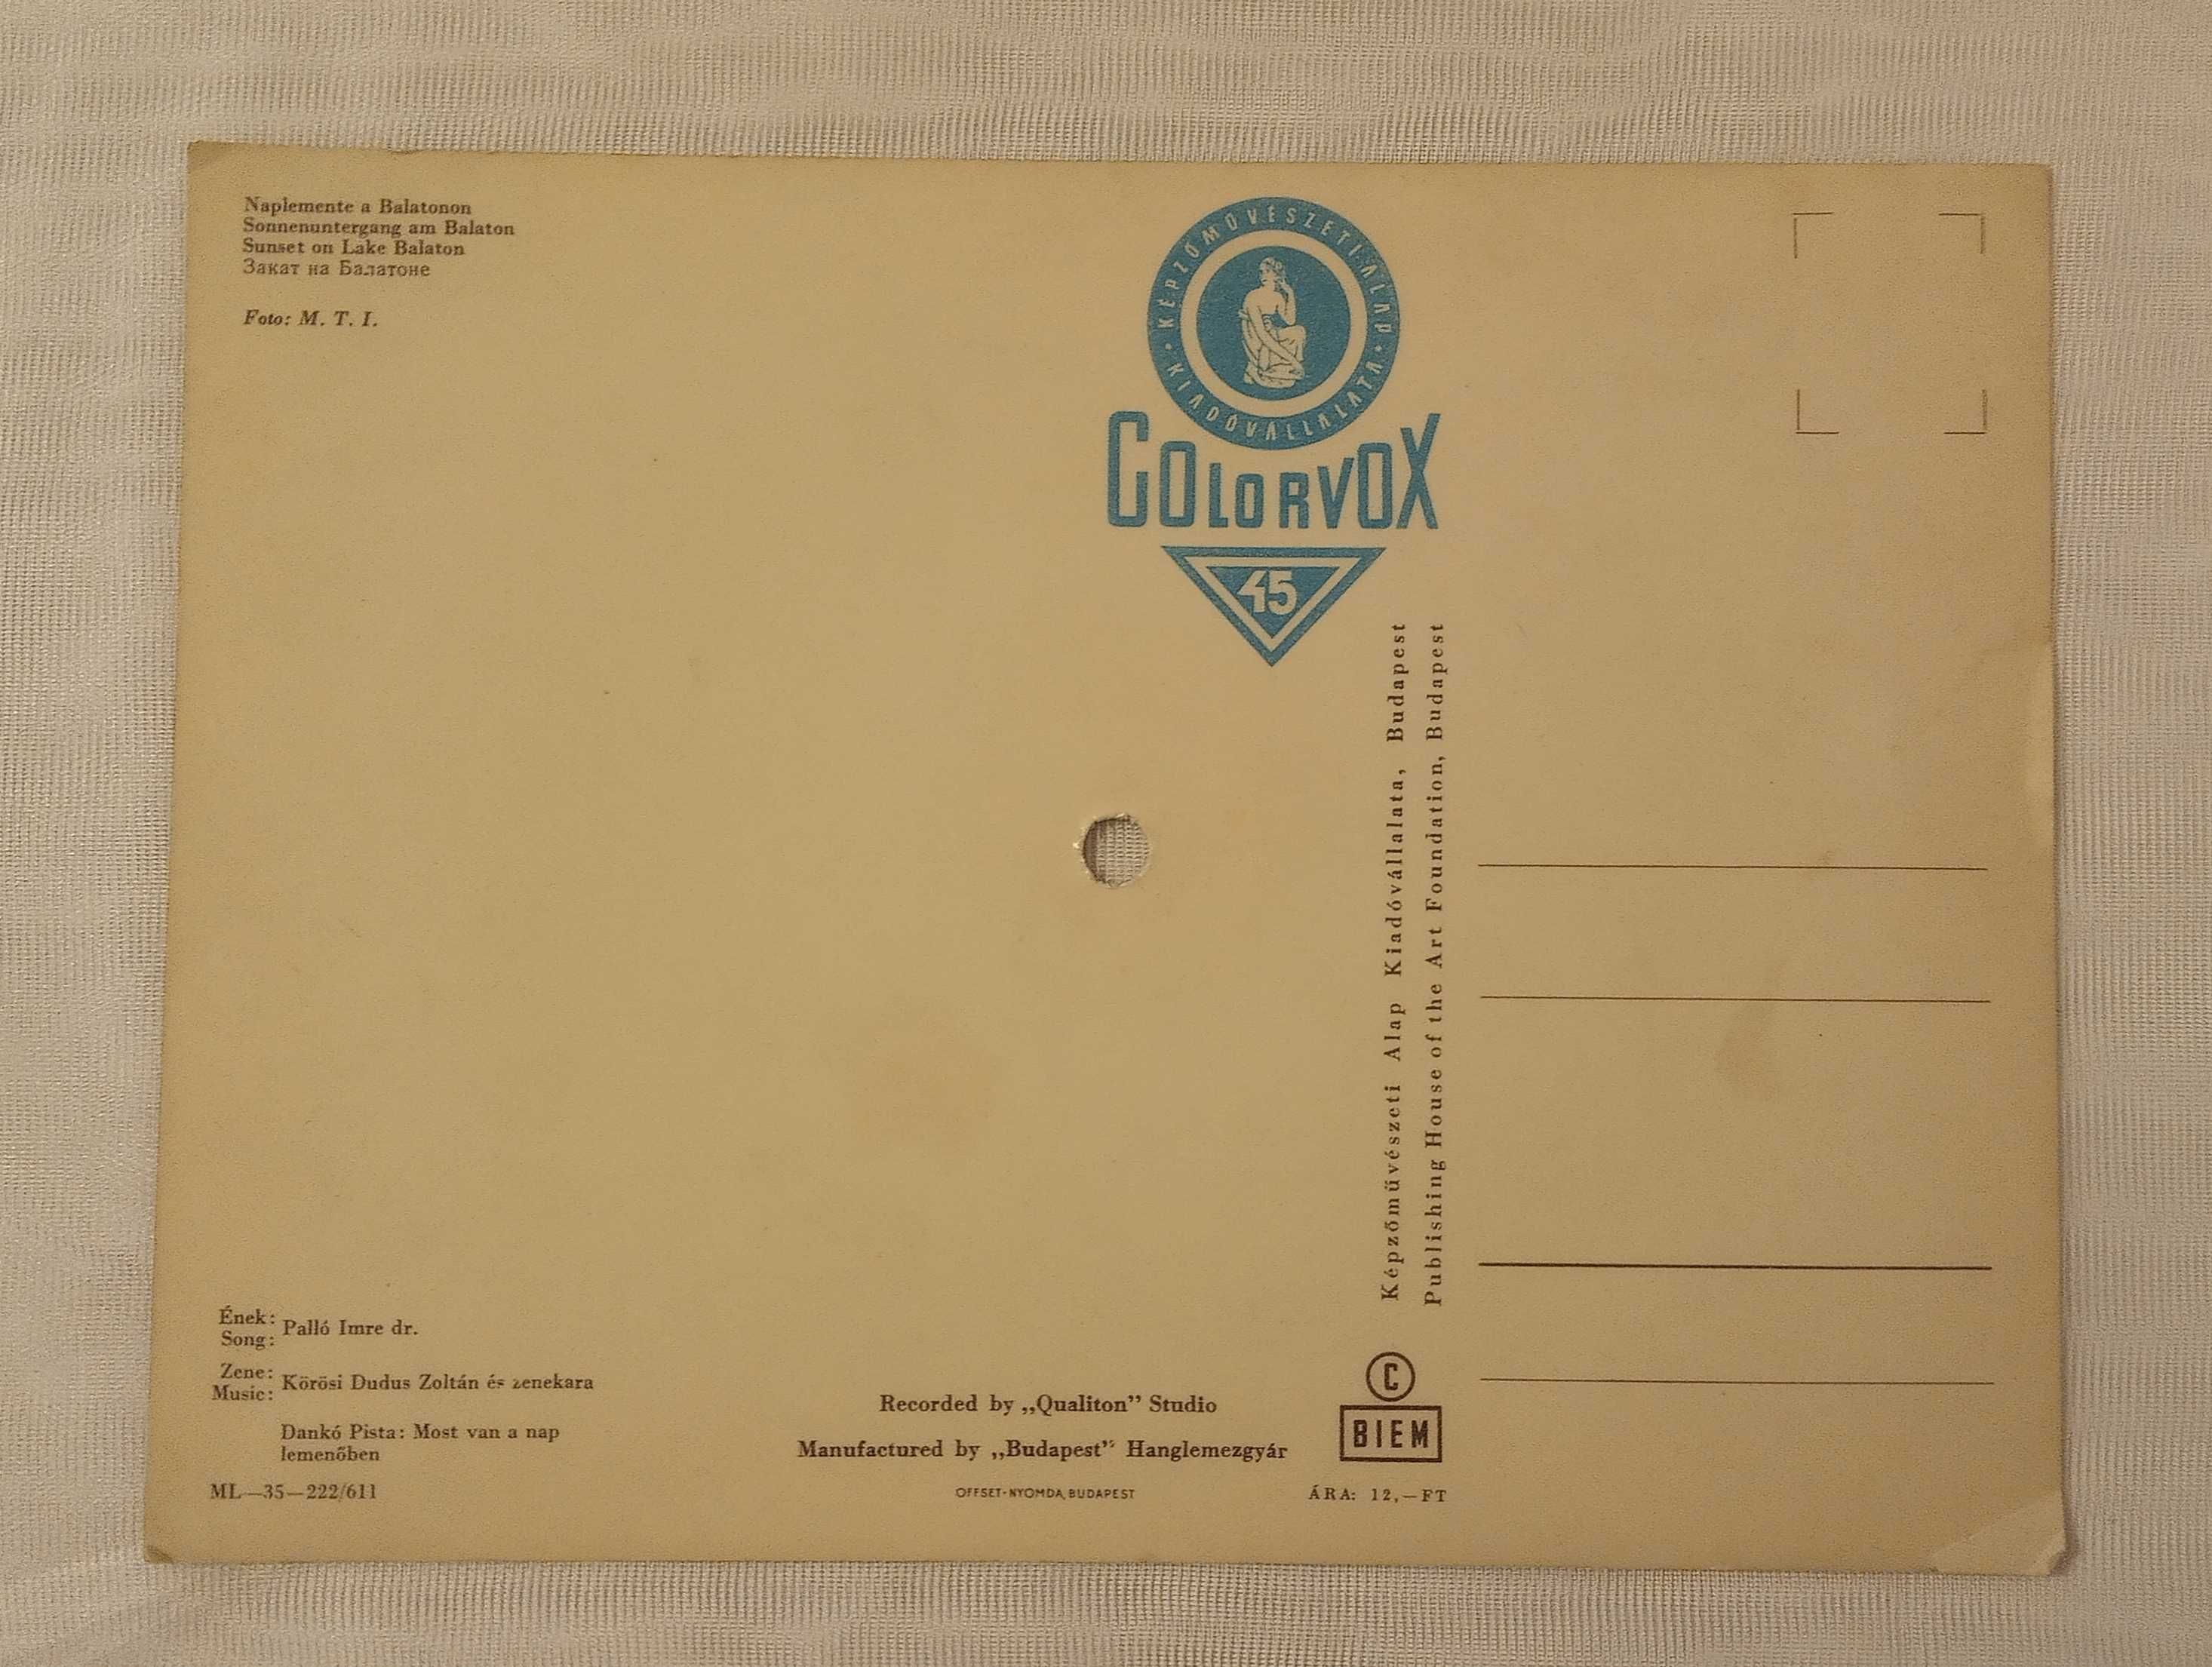 Пластинка- открытка "Colorvox", Венгрия 60е г.